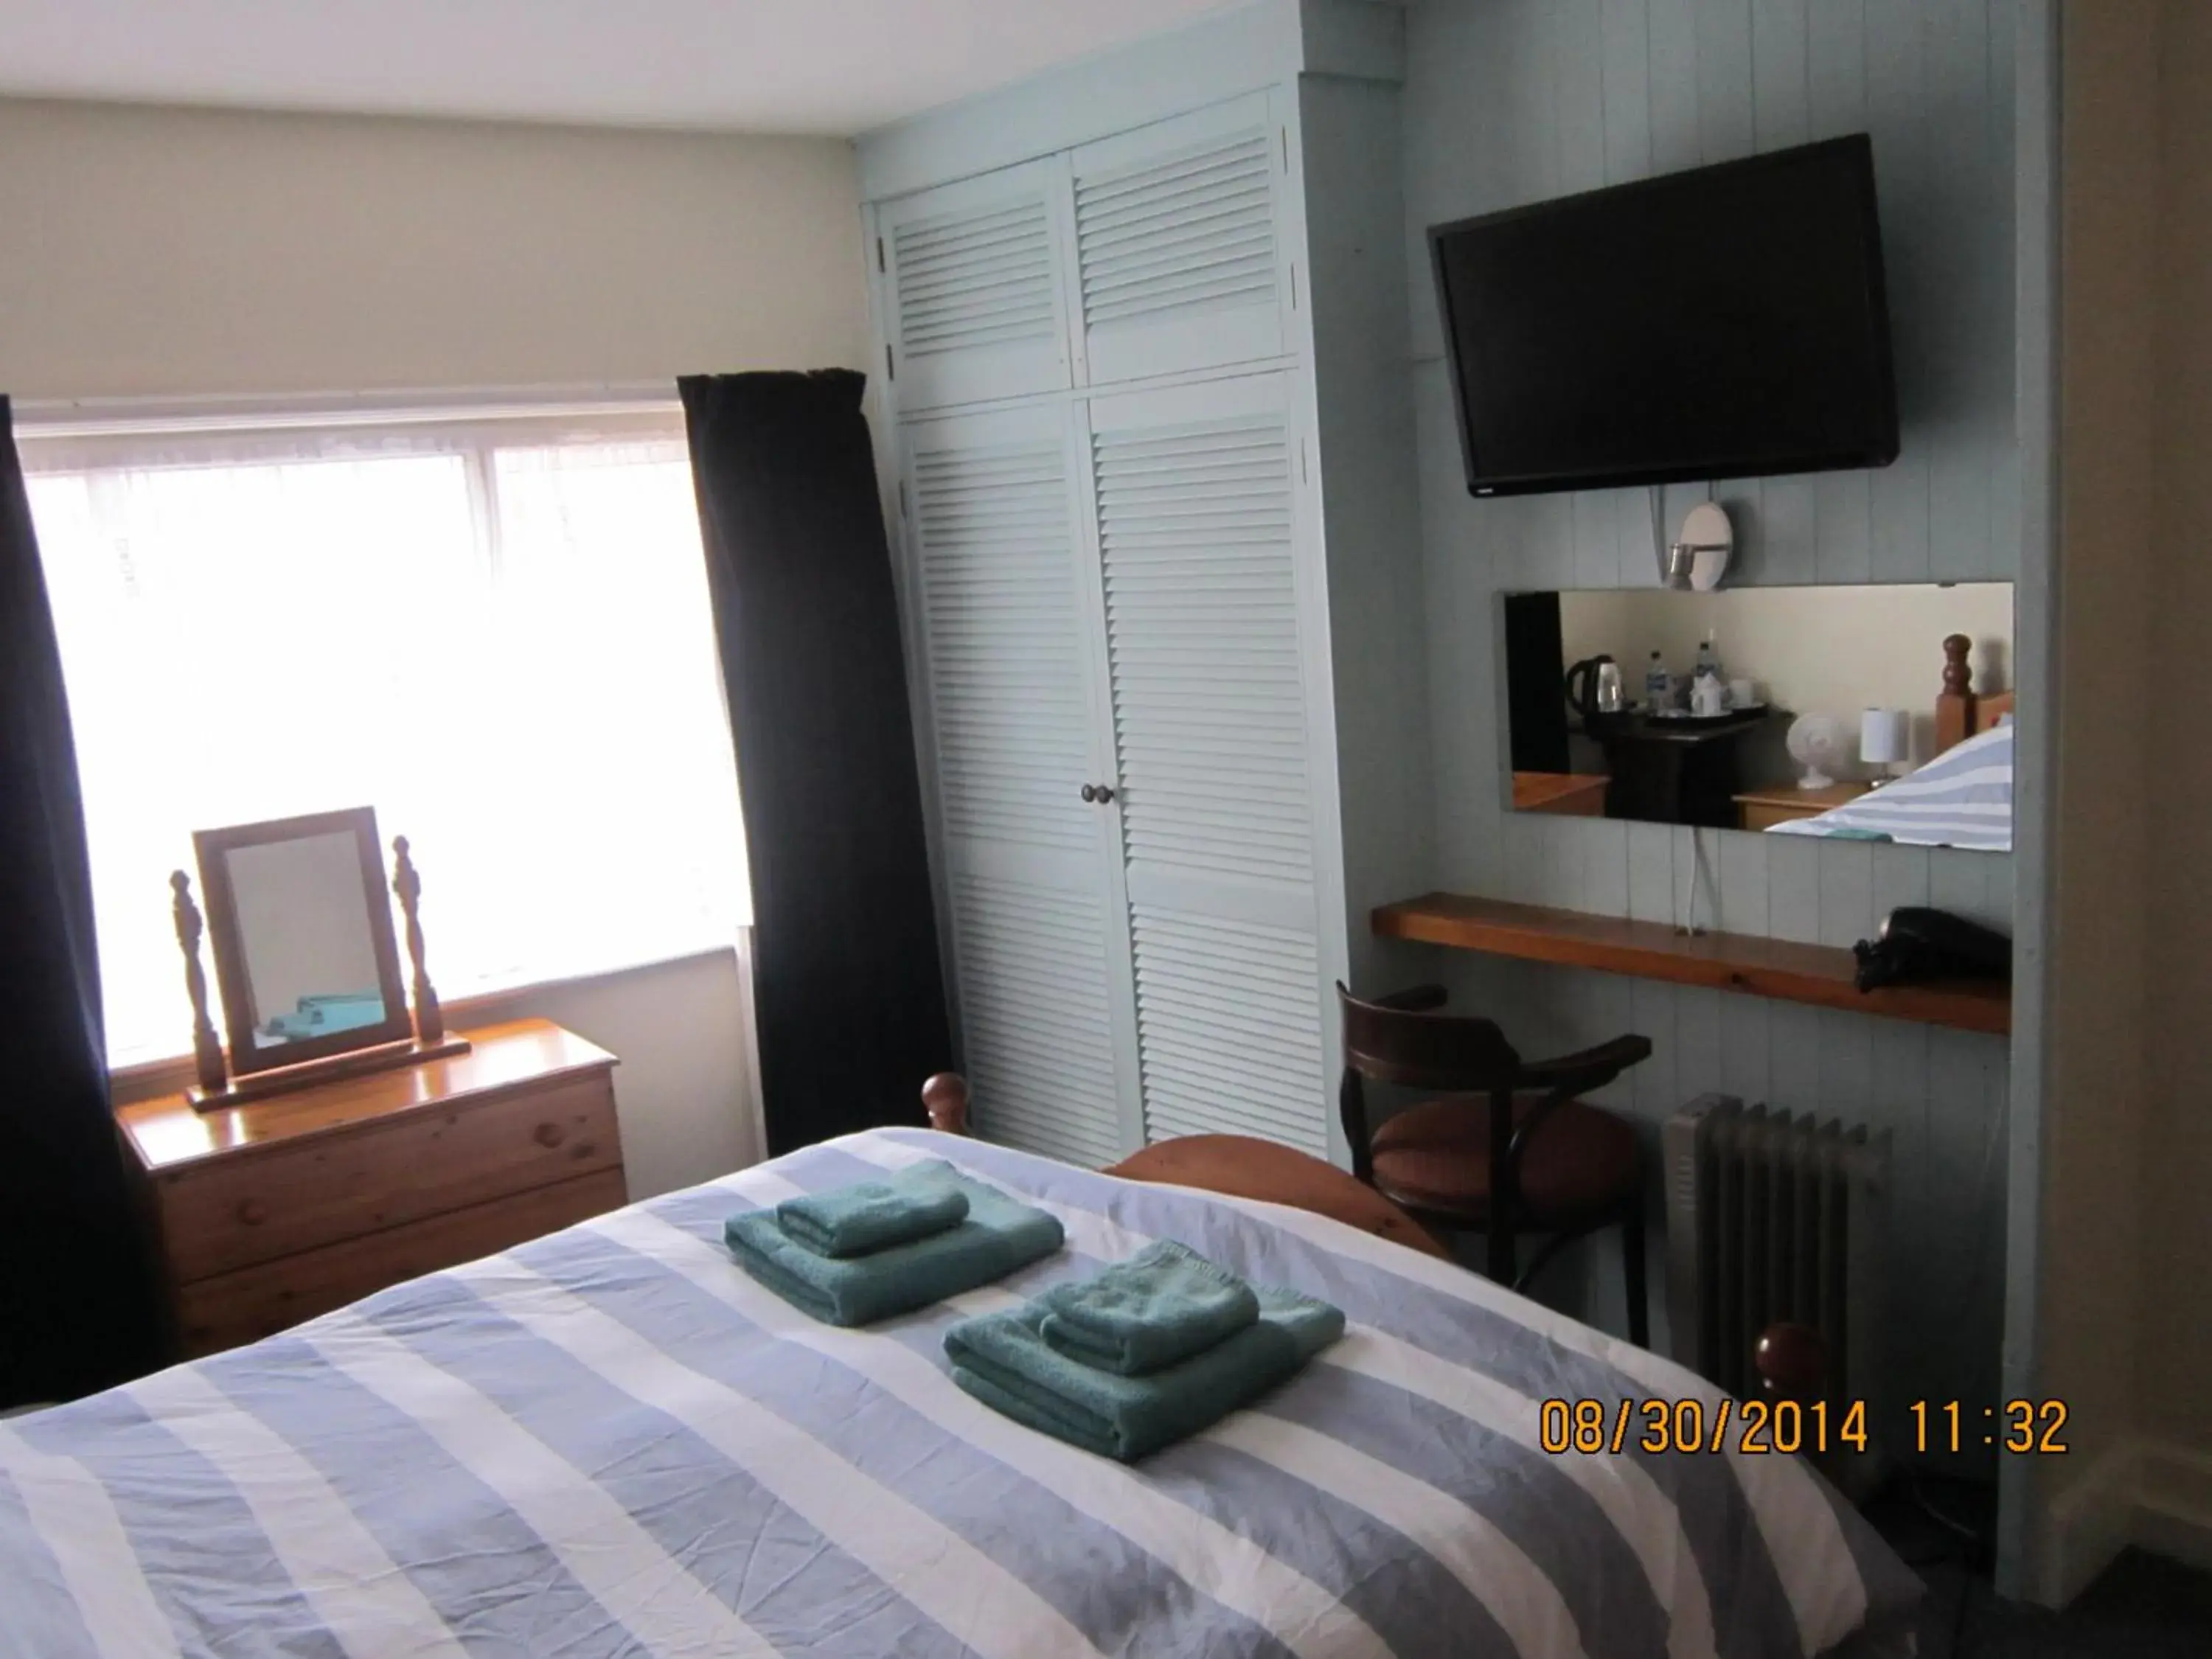 Bedroom, TV/Entertainment Center in Queen Mary Inn